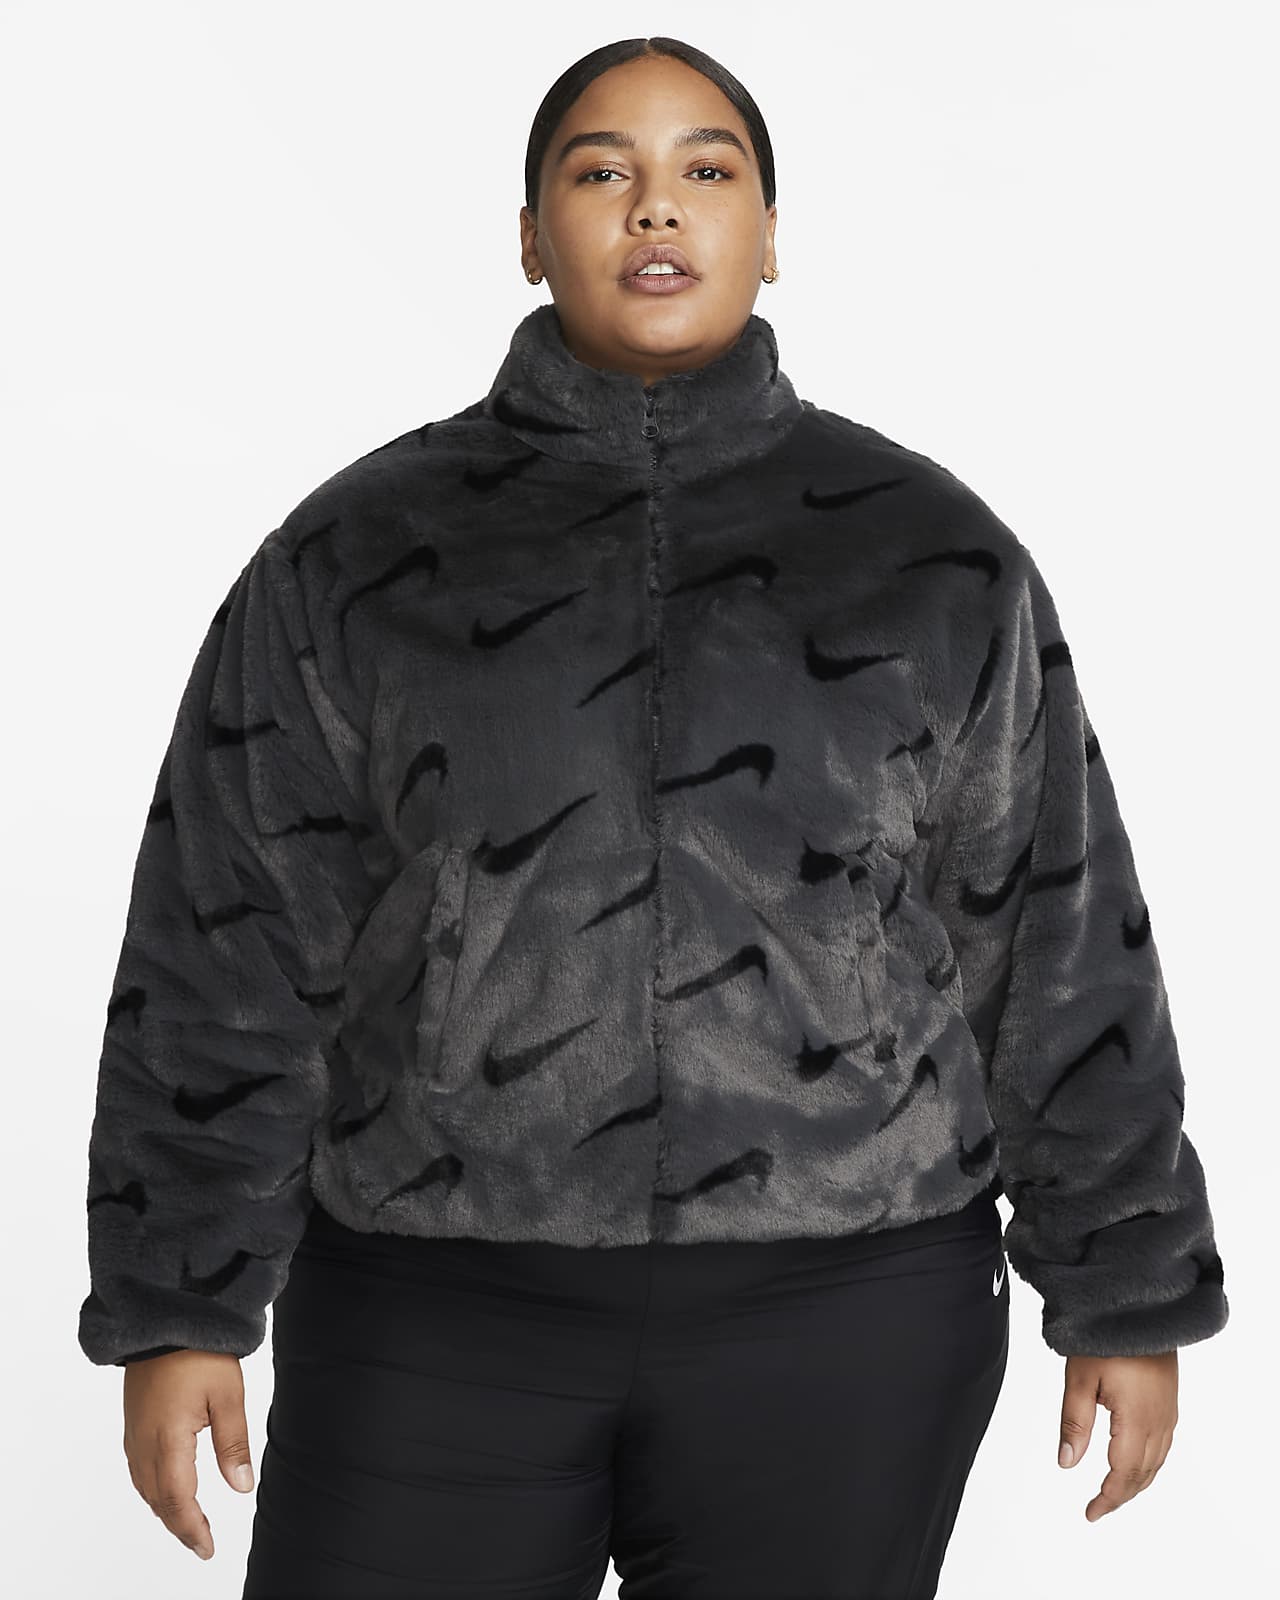 Lydighed kompliceret Forinden Nike Sportswear Women's Printed Faux Fur Jacket (Plus Size). Nike.com